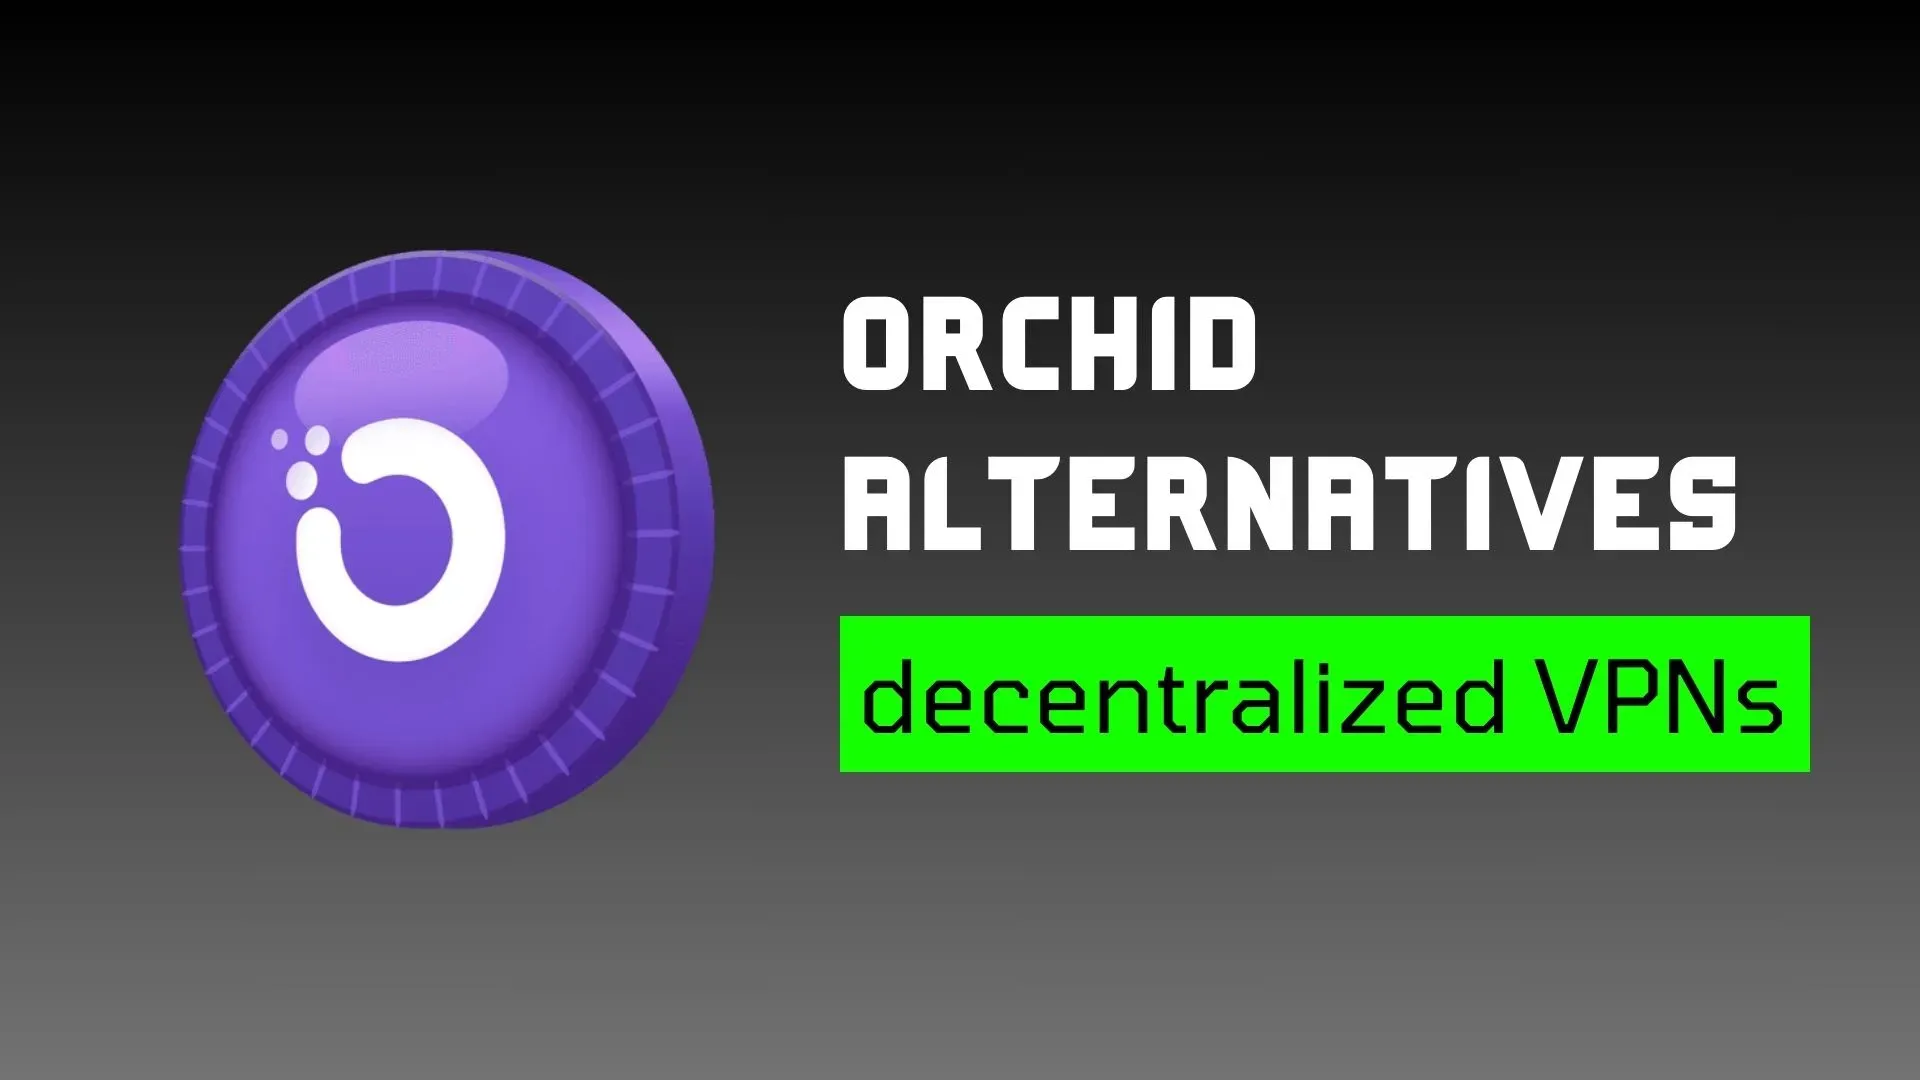 7 Best Orchid Alternatives (Decentralized VPNs) For Asians